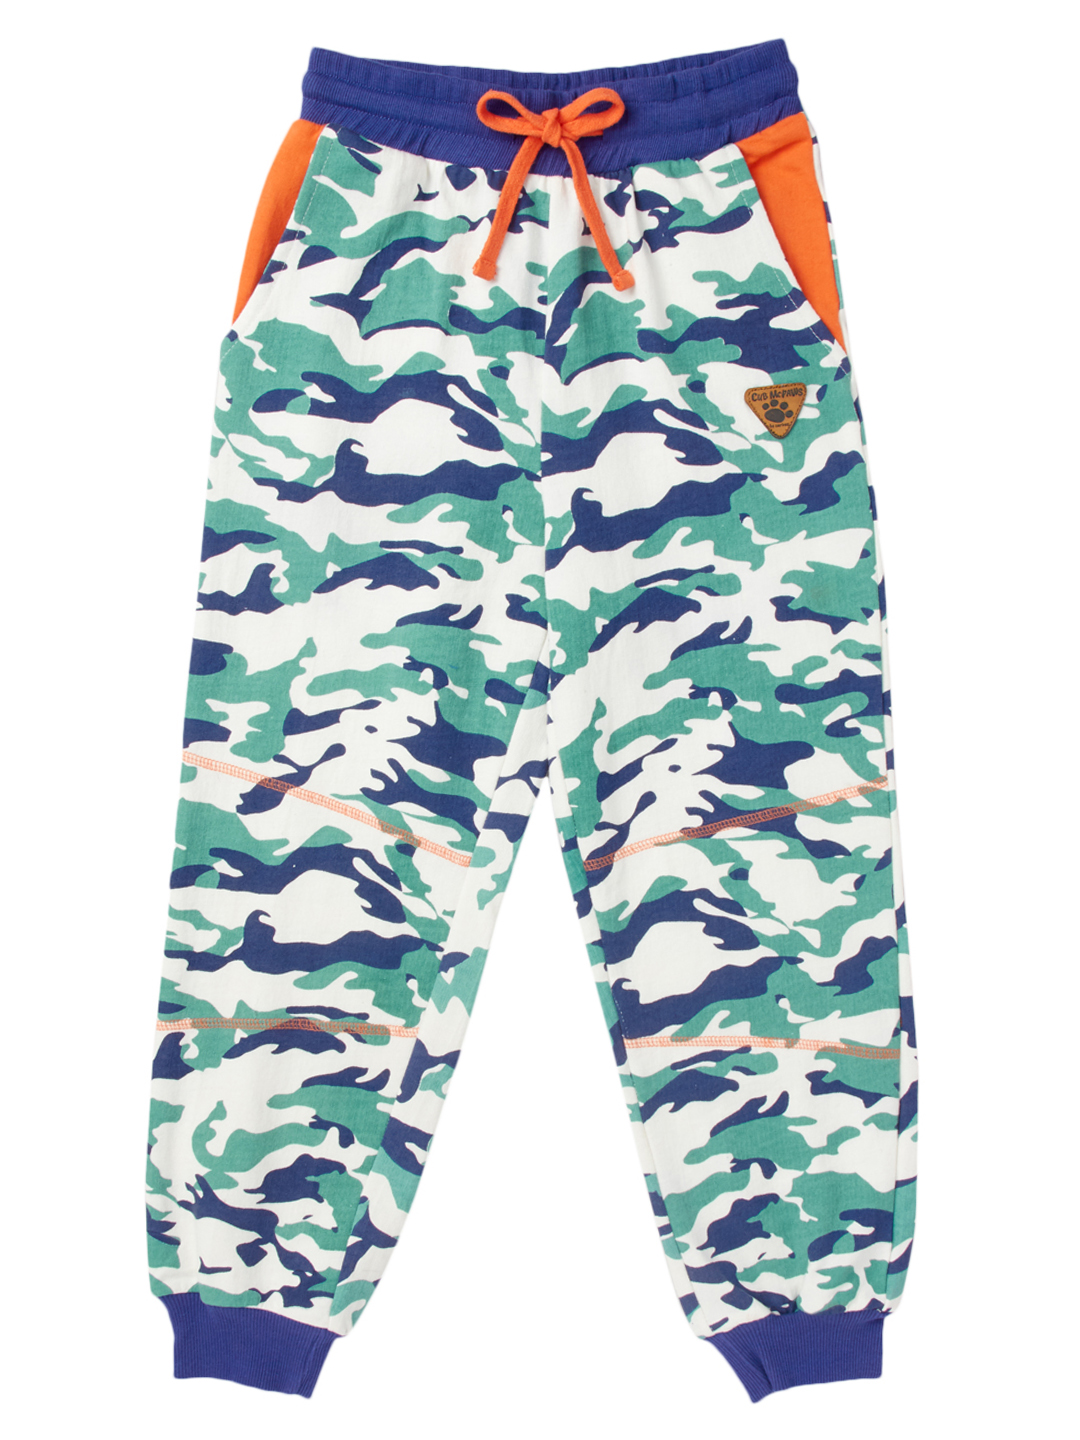 Boys Track pant - Camouflage Print